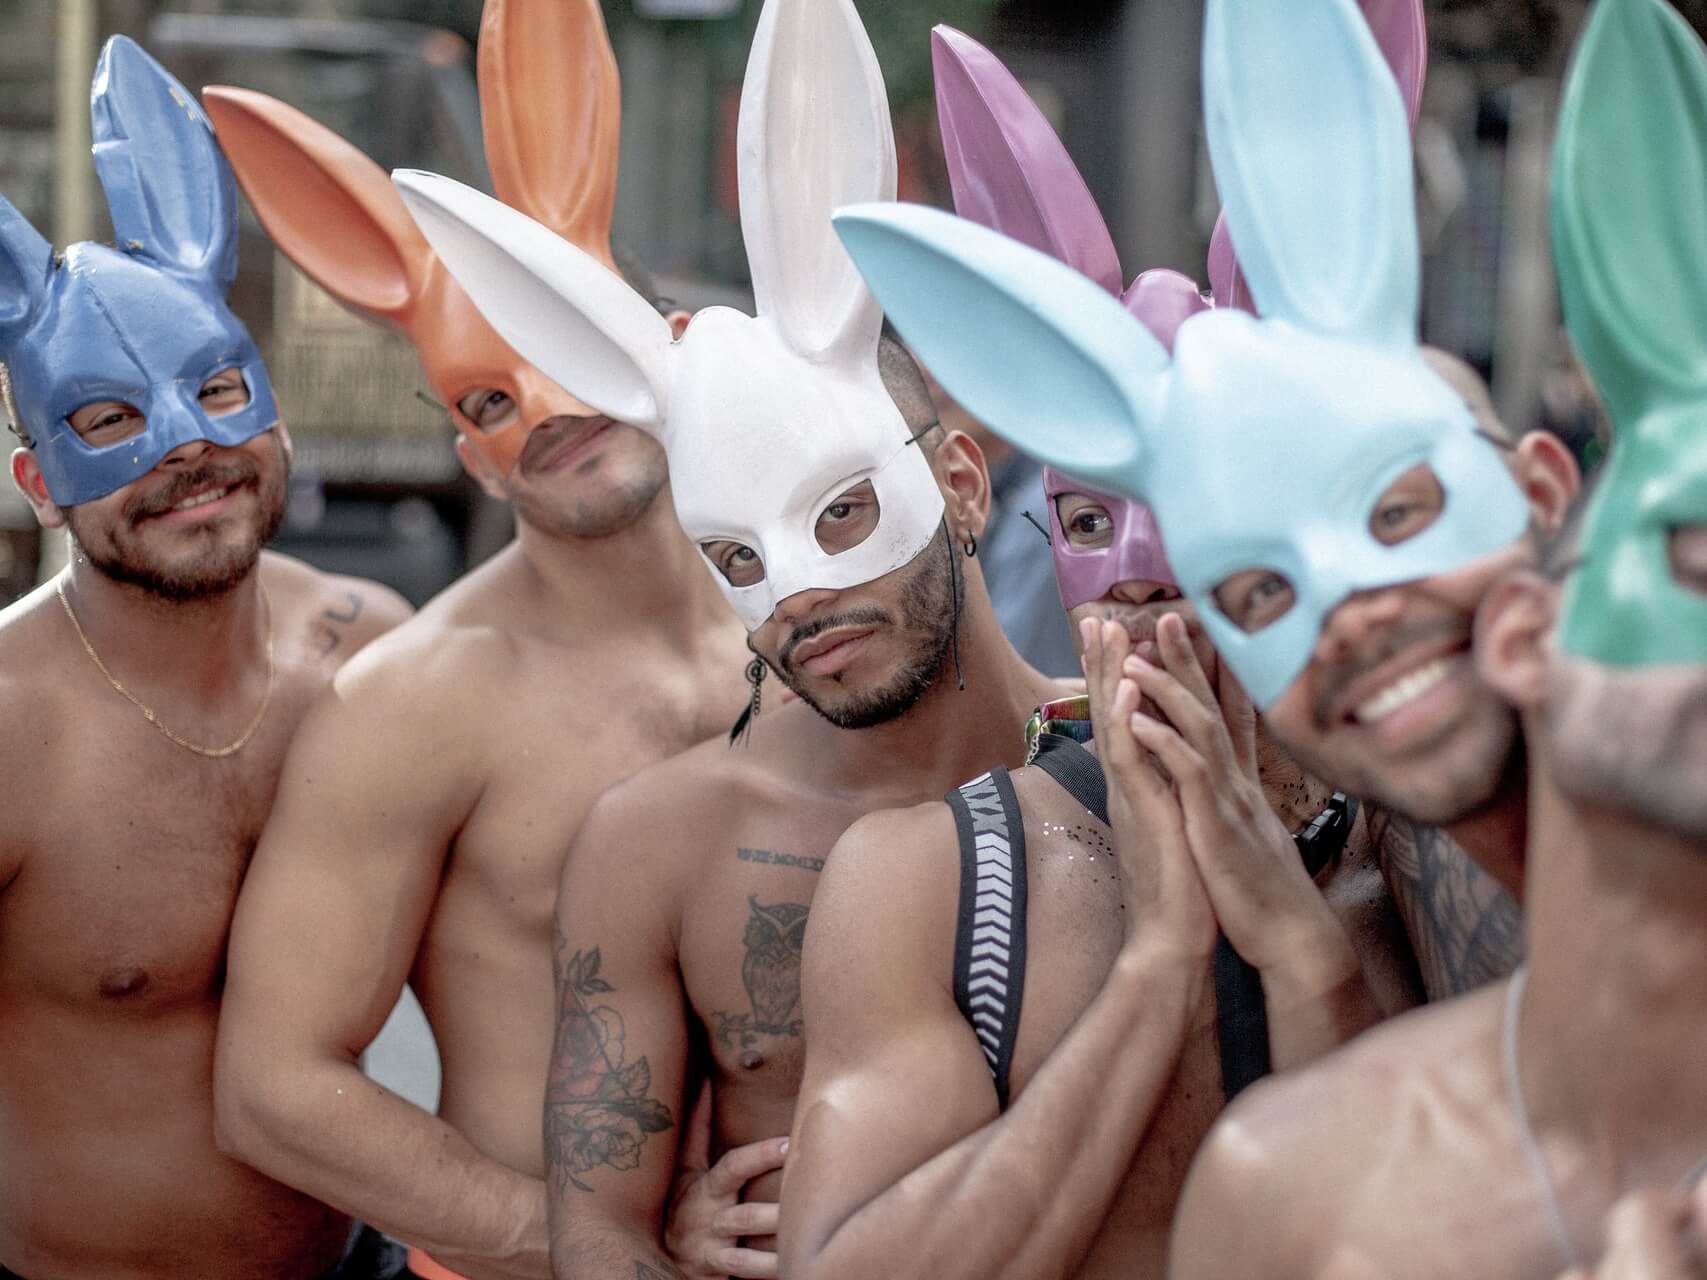 Men in bunny boy masks